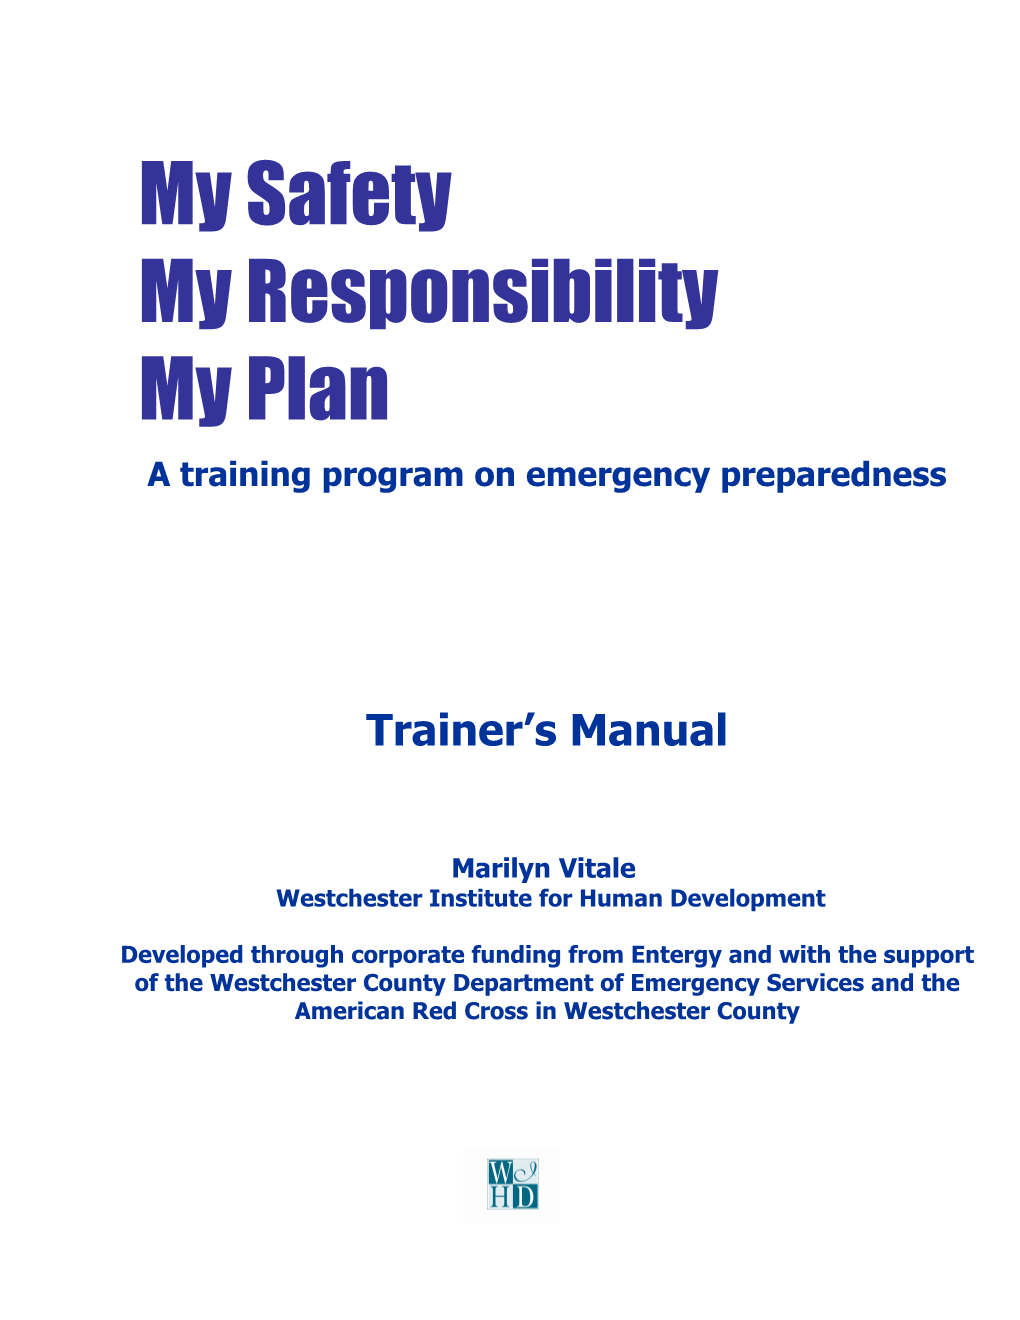 A Training Program on Emergency Preparedness